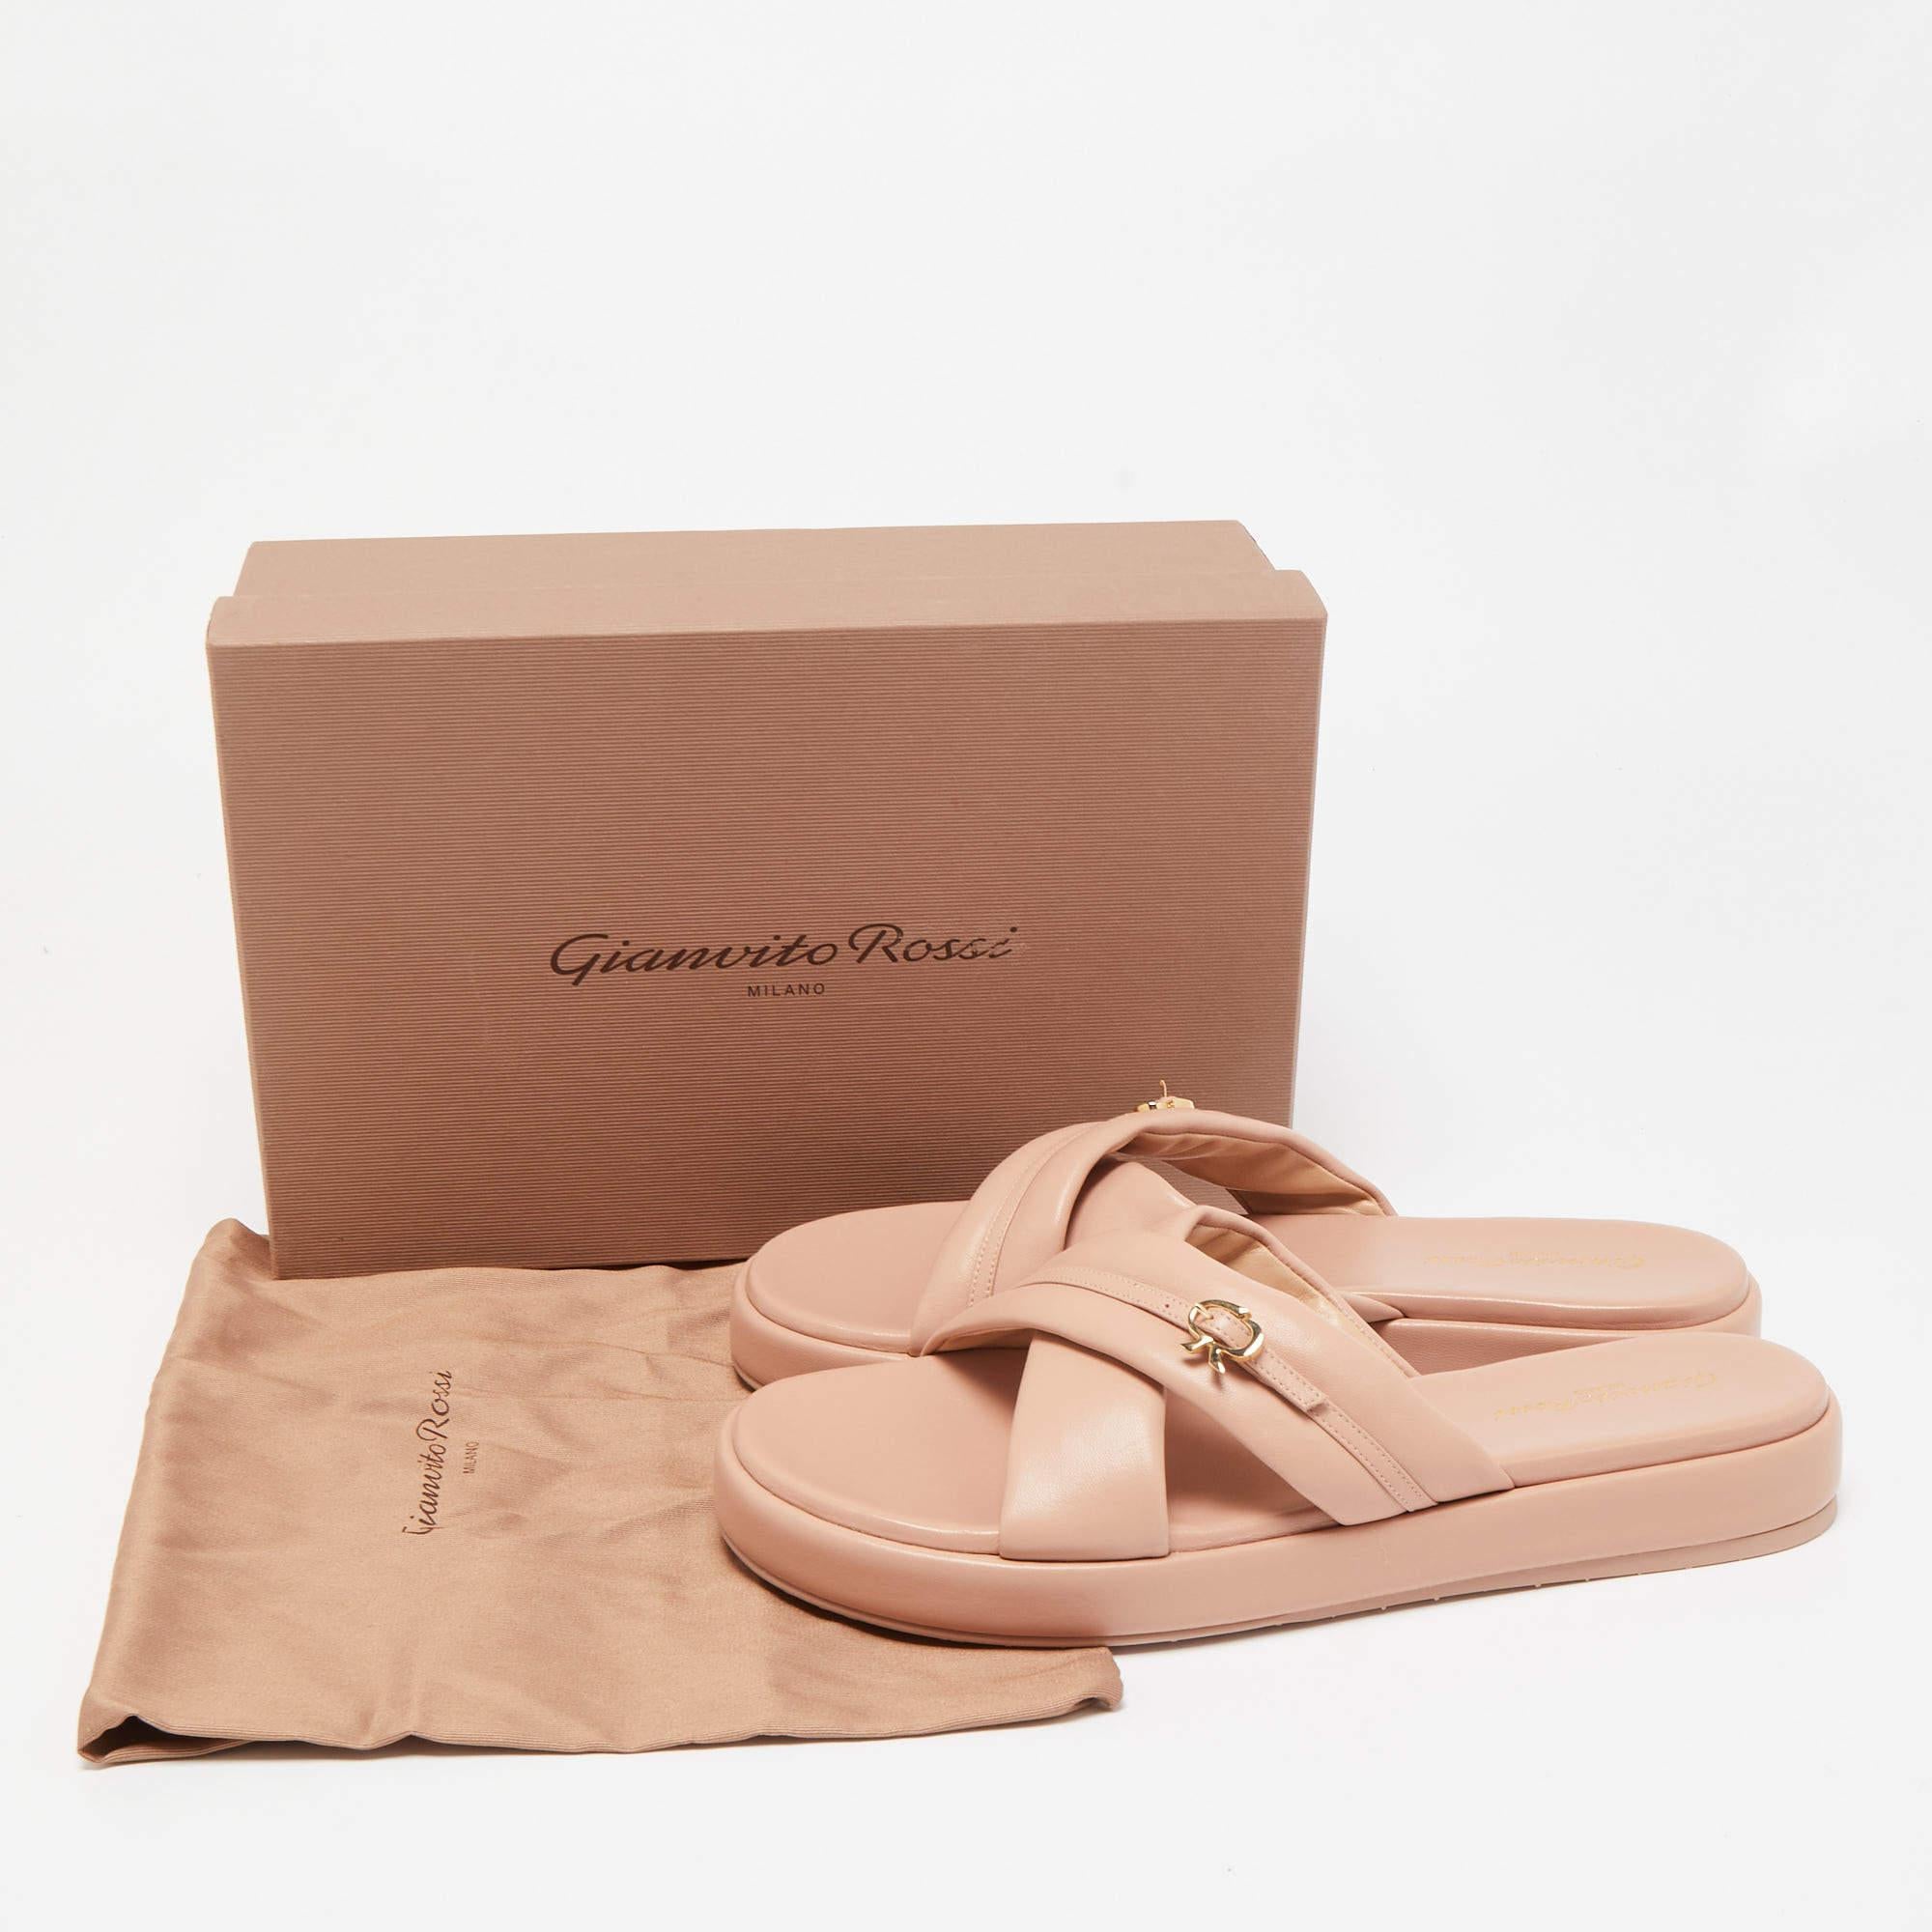 Gianvito Rossi Beige Leather Flatofrm Slide Sandals Size 41.5 5